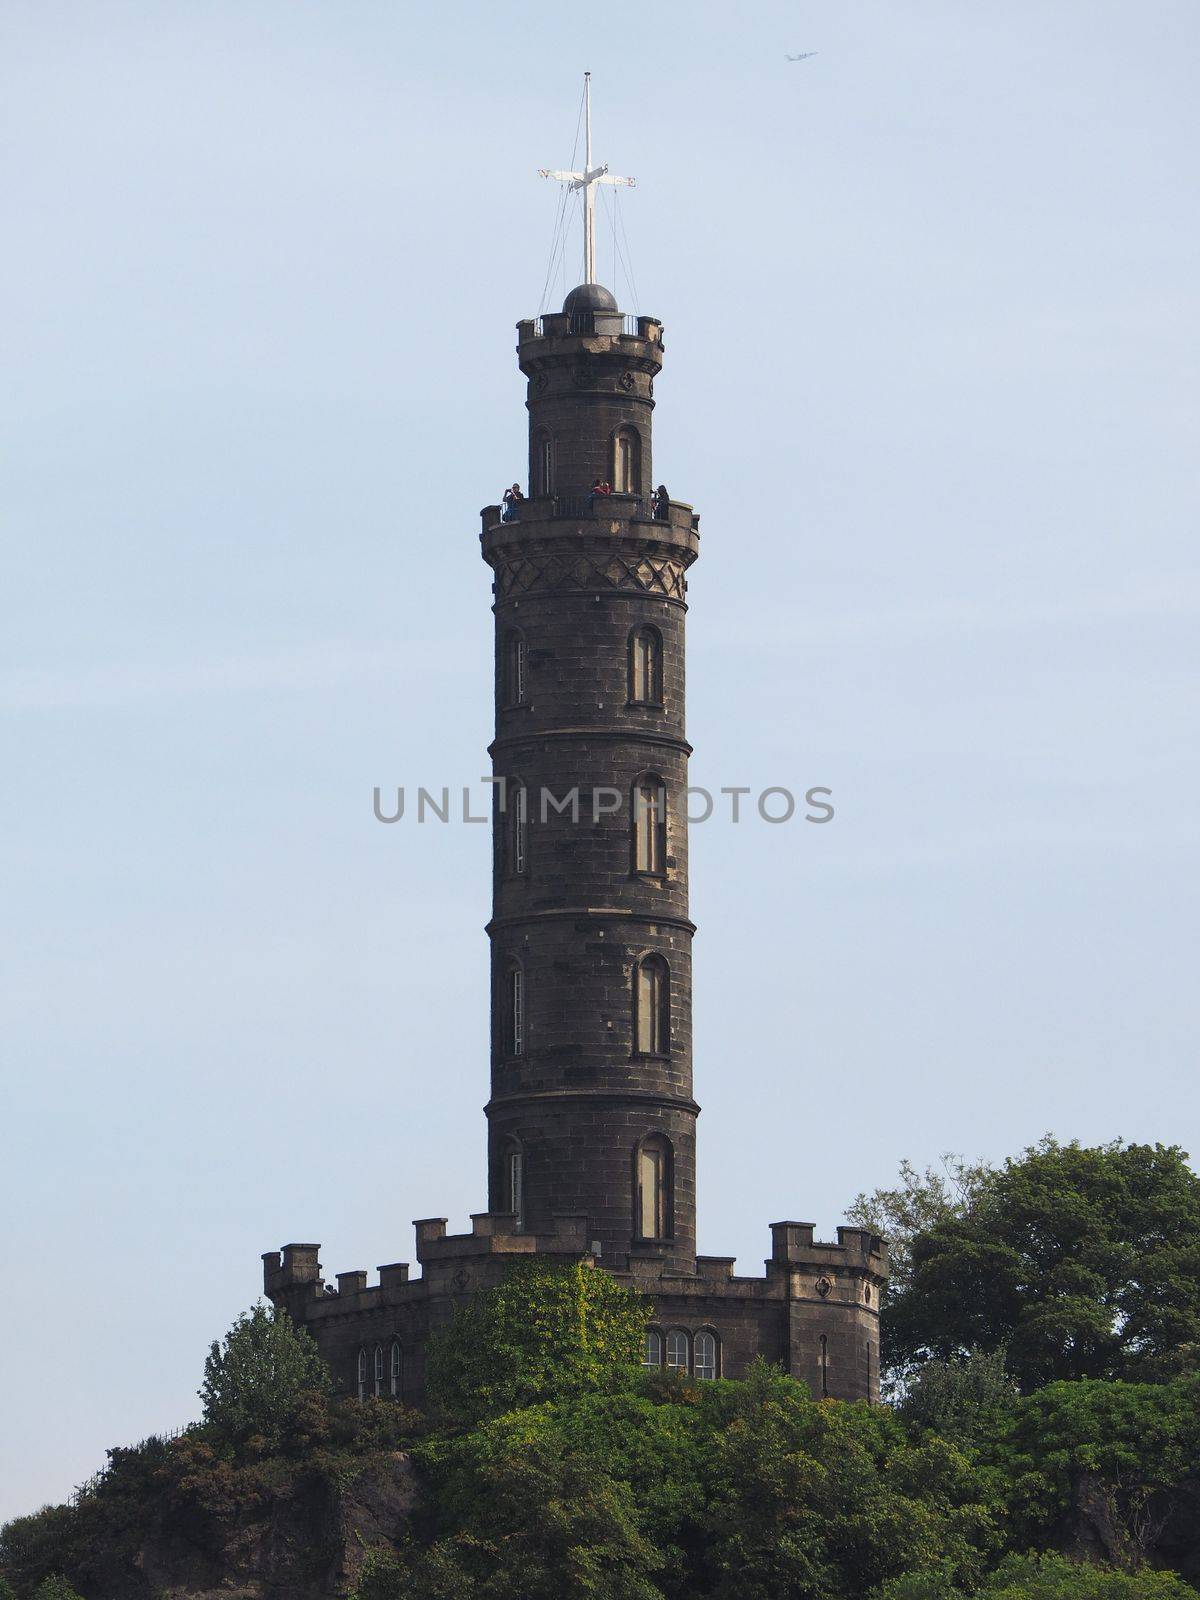 The Nelson monument on Calton Hill in Edinburgh, UK